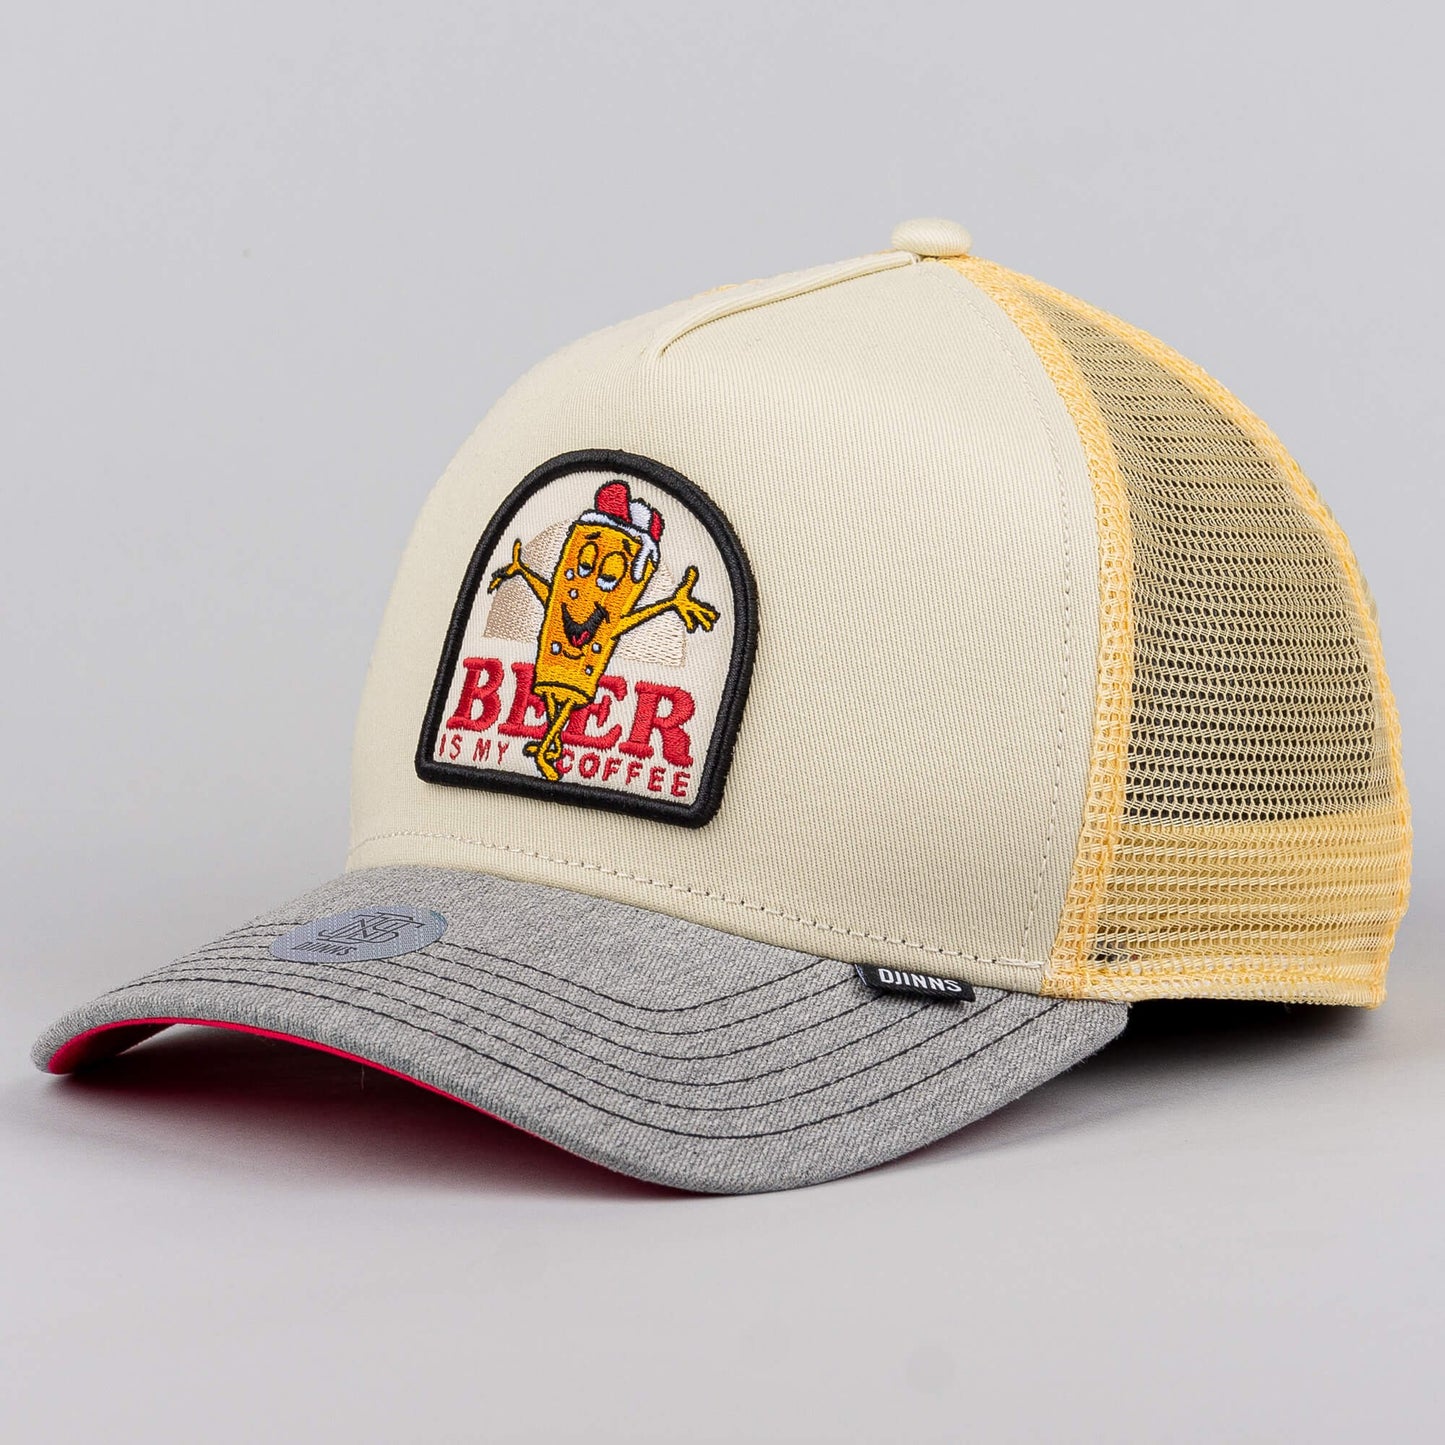 Djinn's Trucker Cap HFT Food Beer & Coffee Grey/Heather Grey